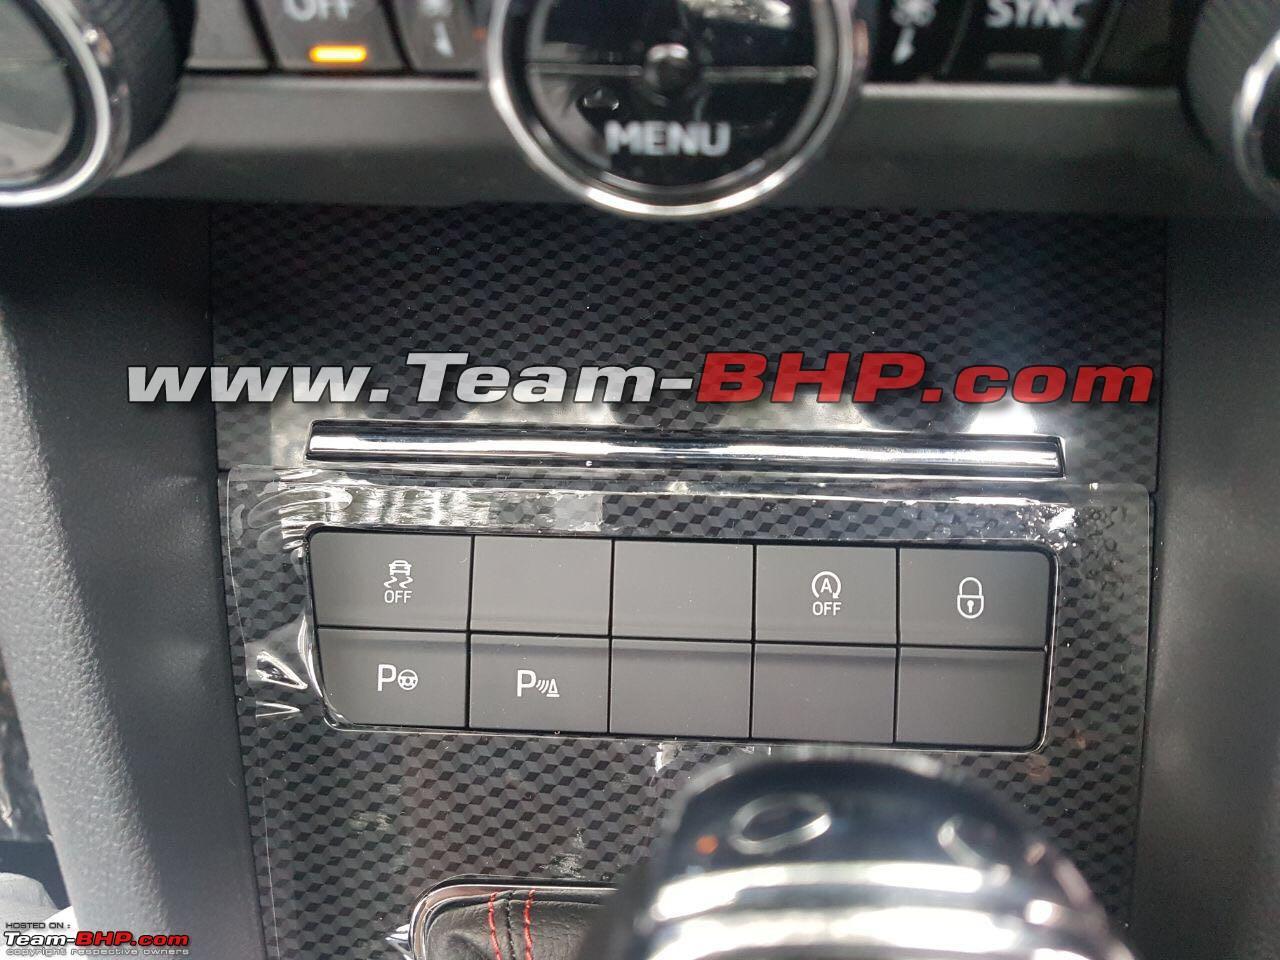 Skoda Octavia RS arrives at dealer; interior pics | Team-BHP